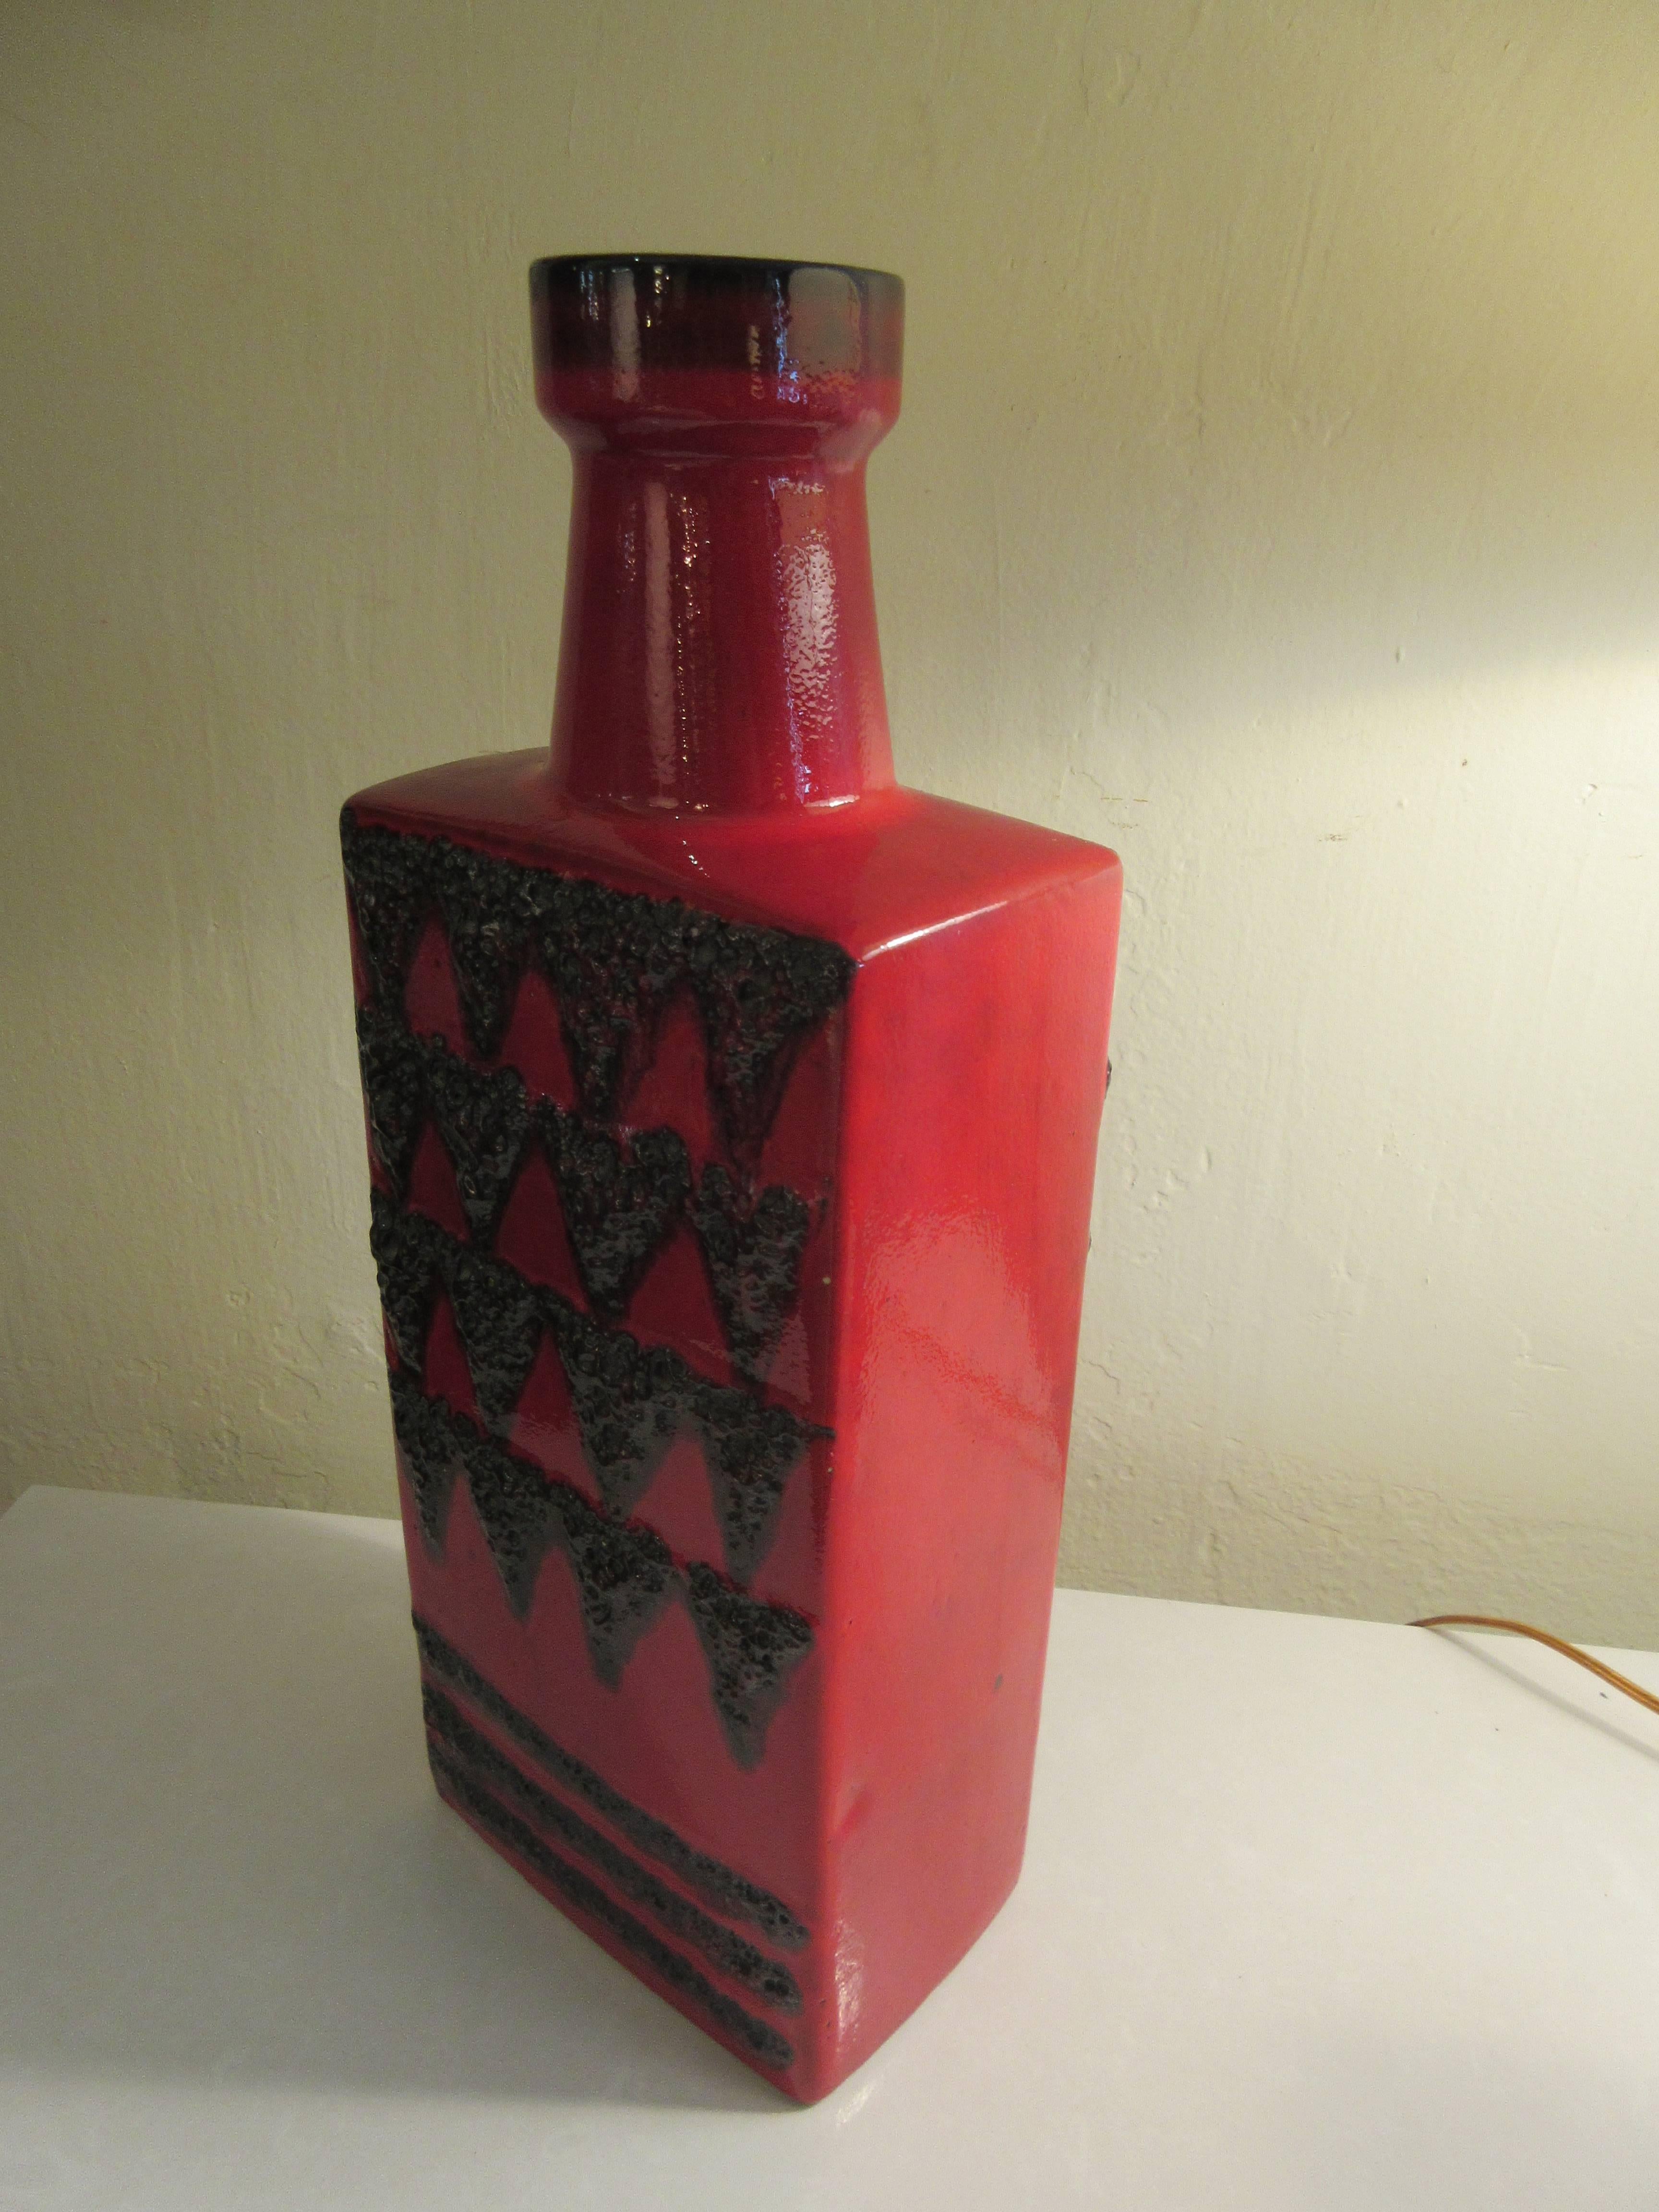 Monumental Scheurich Keramik Vase in brilliant red and black volcanic glaze.